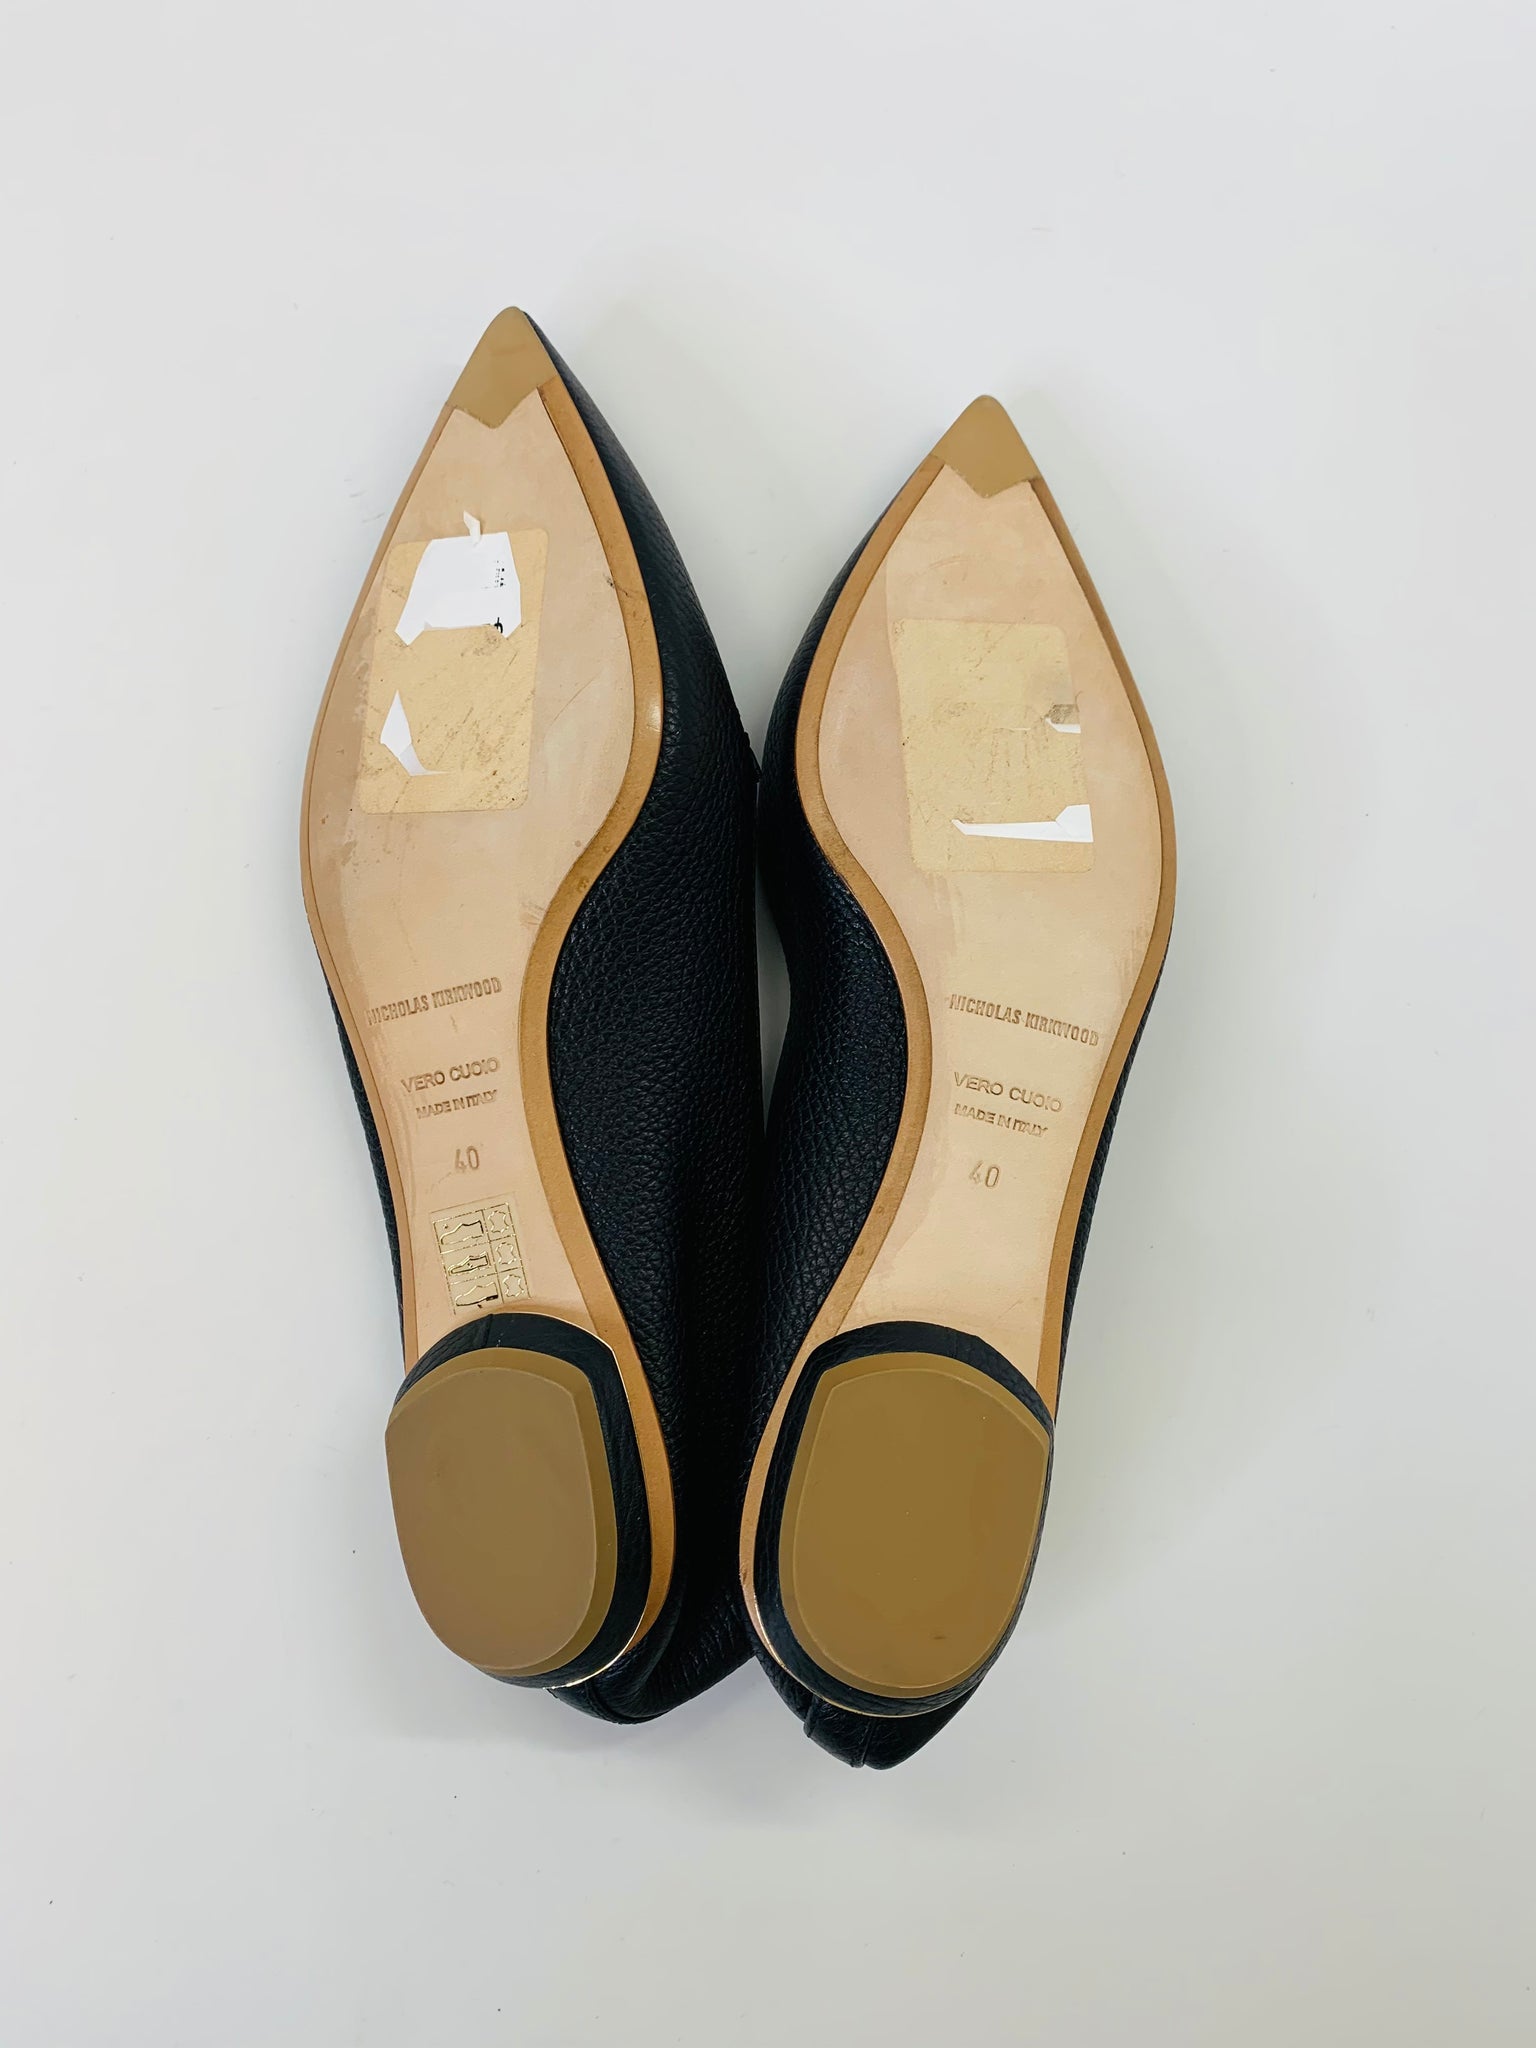 NIB Nicholas Kirkwood Alona Loafers in Black/Gold/White Size 9.5 M